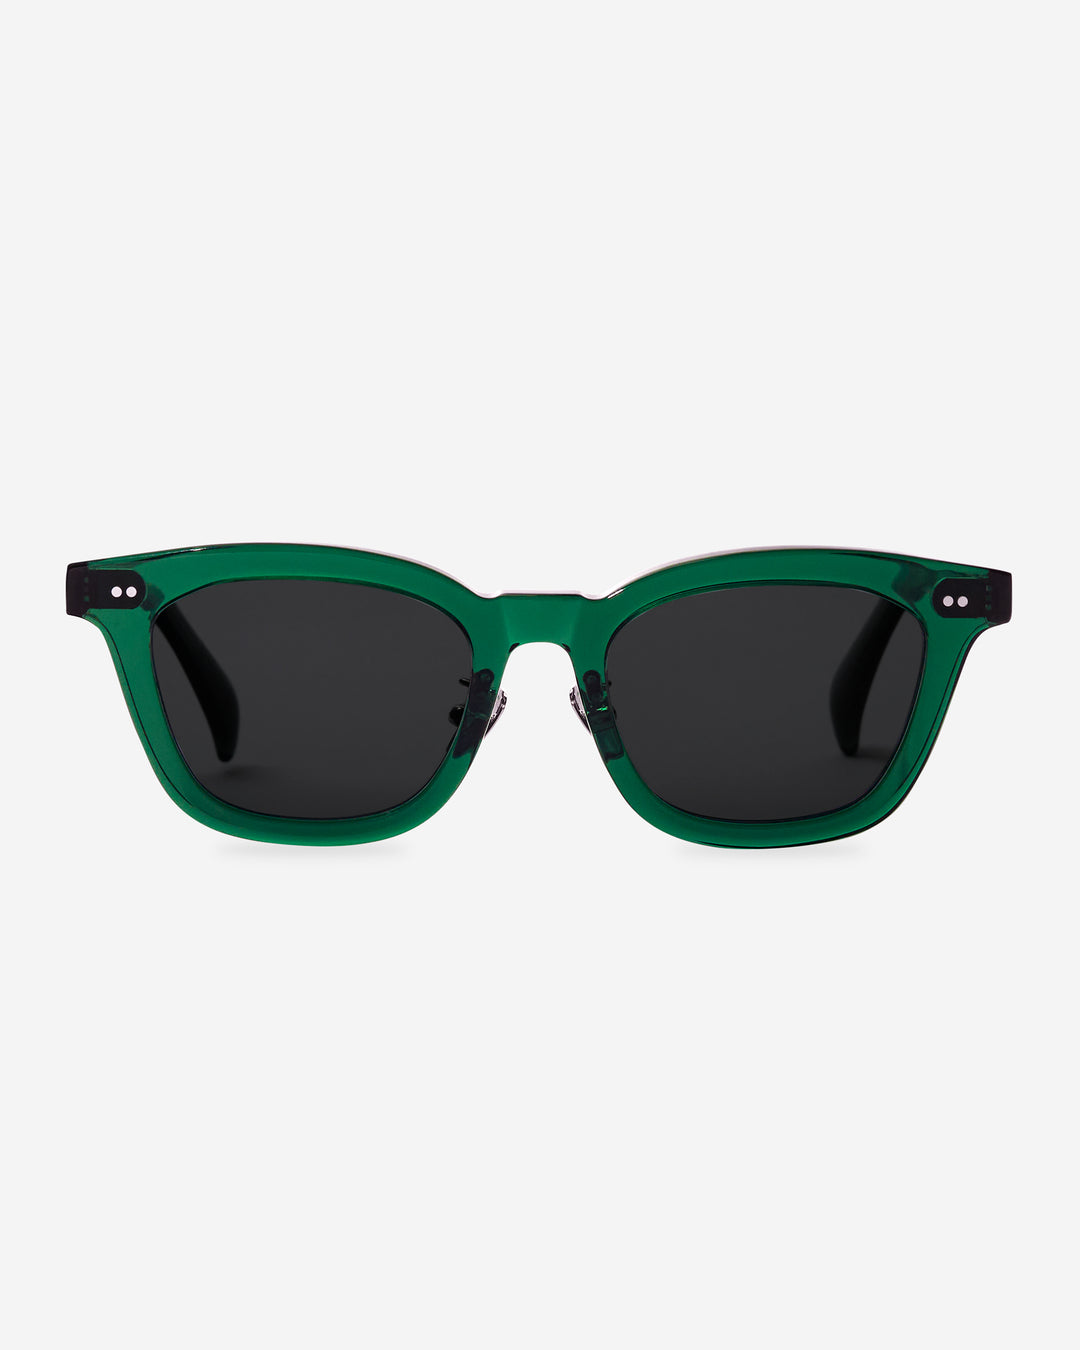 Koya Sunglasses - Forest Green